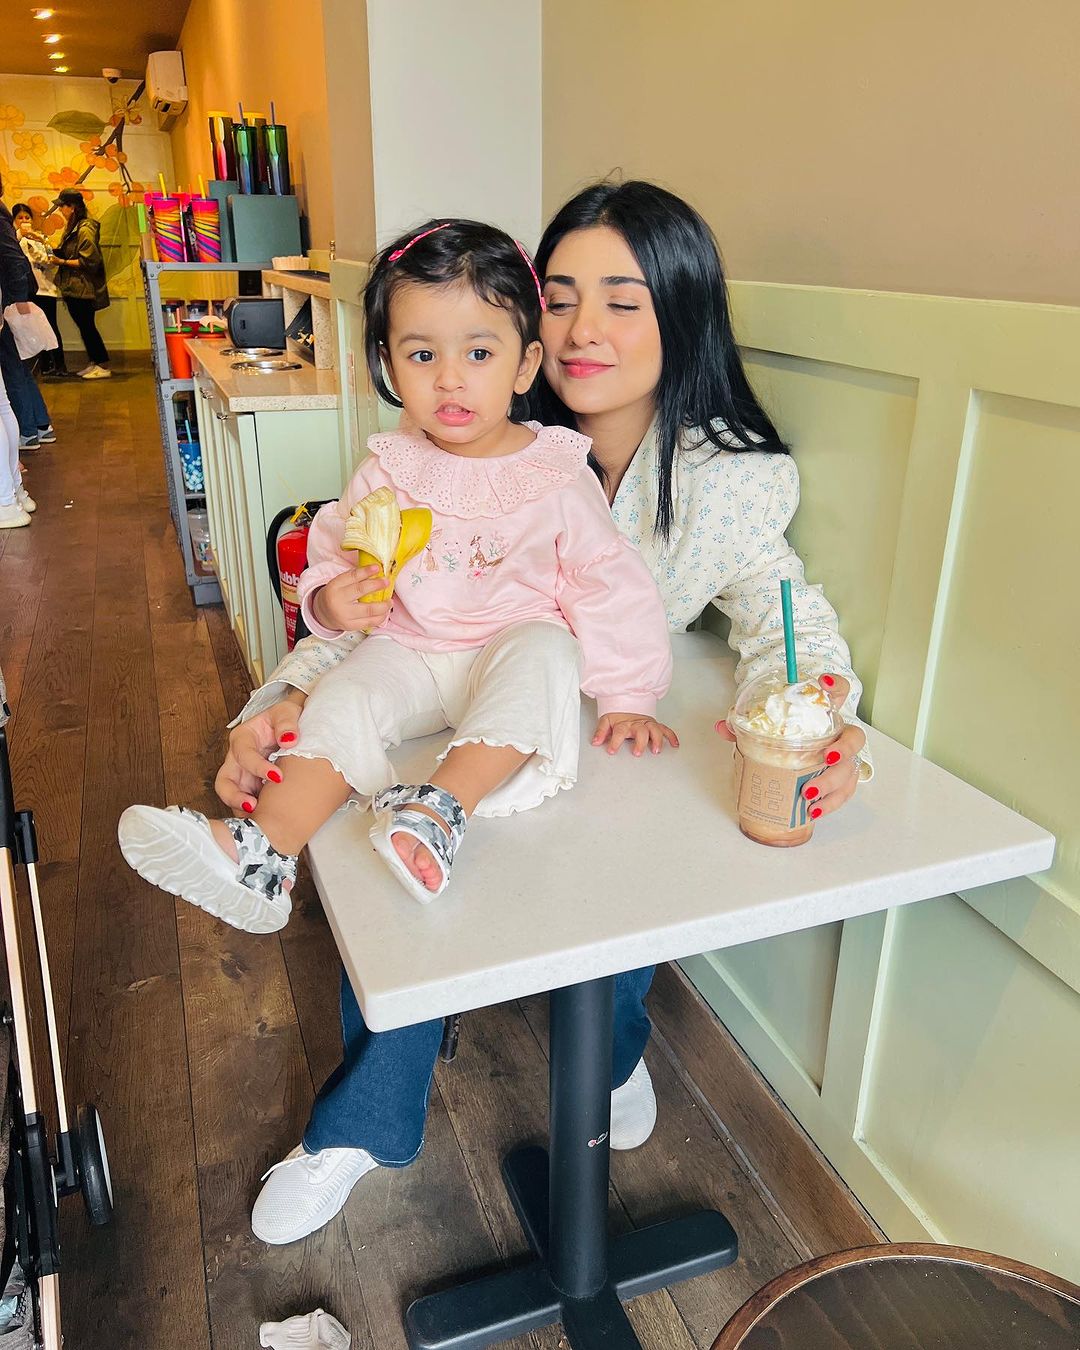 Sarah Khan Melts Hearts with Adorable mother daughter duo